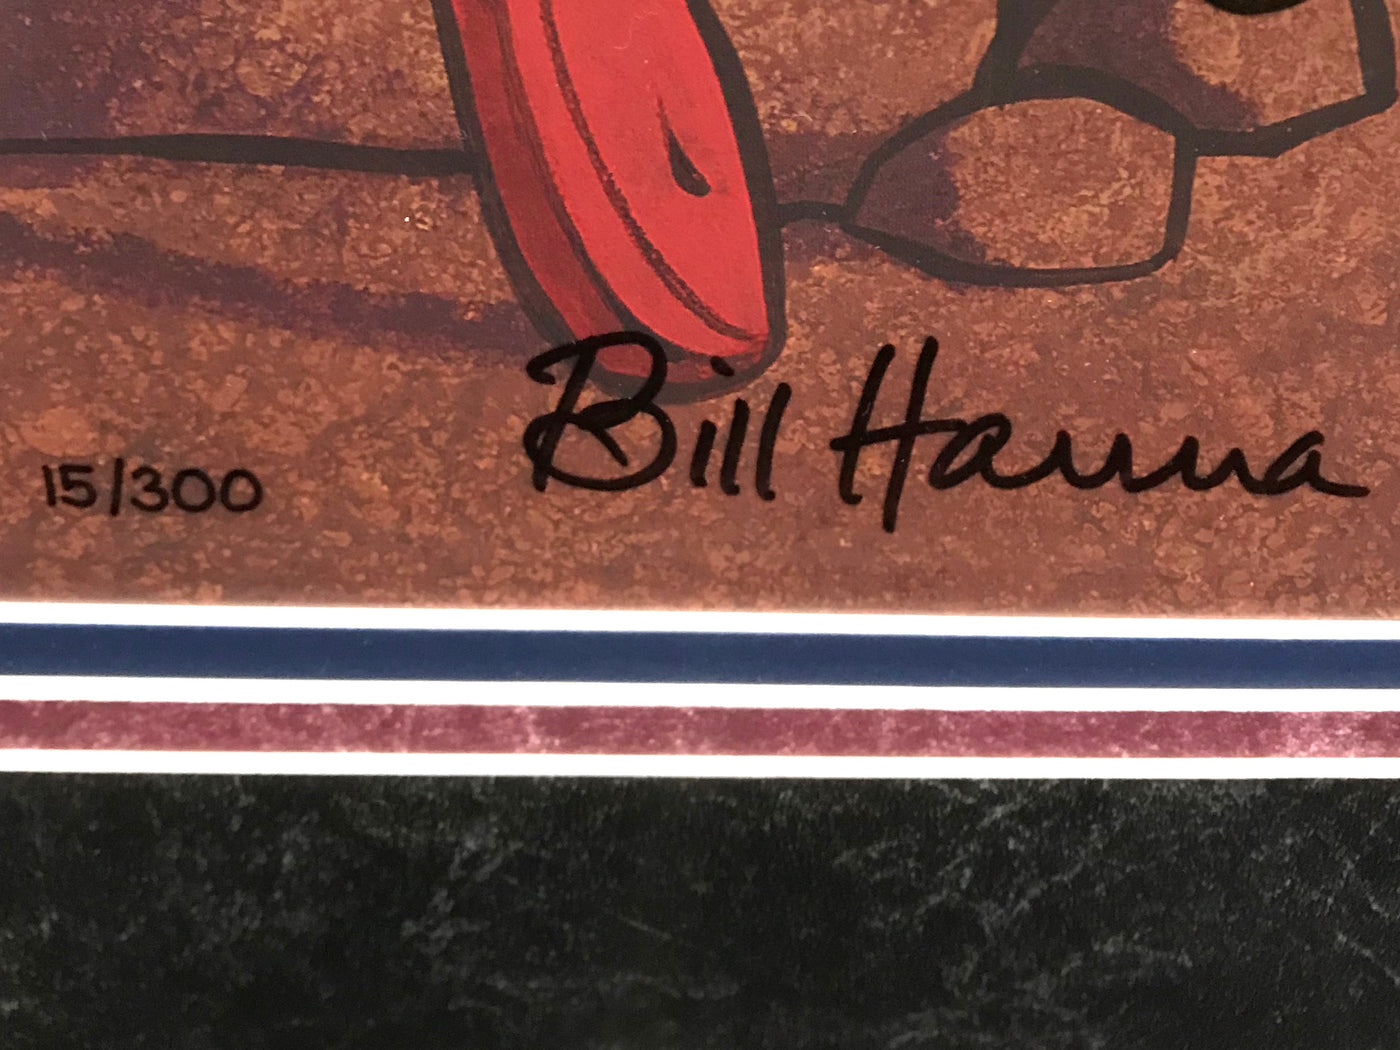 Original Hanna Barbera Limited Edition Cel, The Return of Stoney Curtis